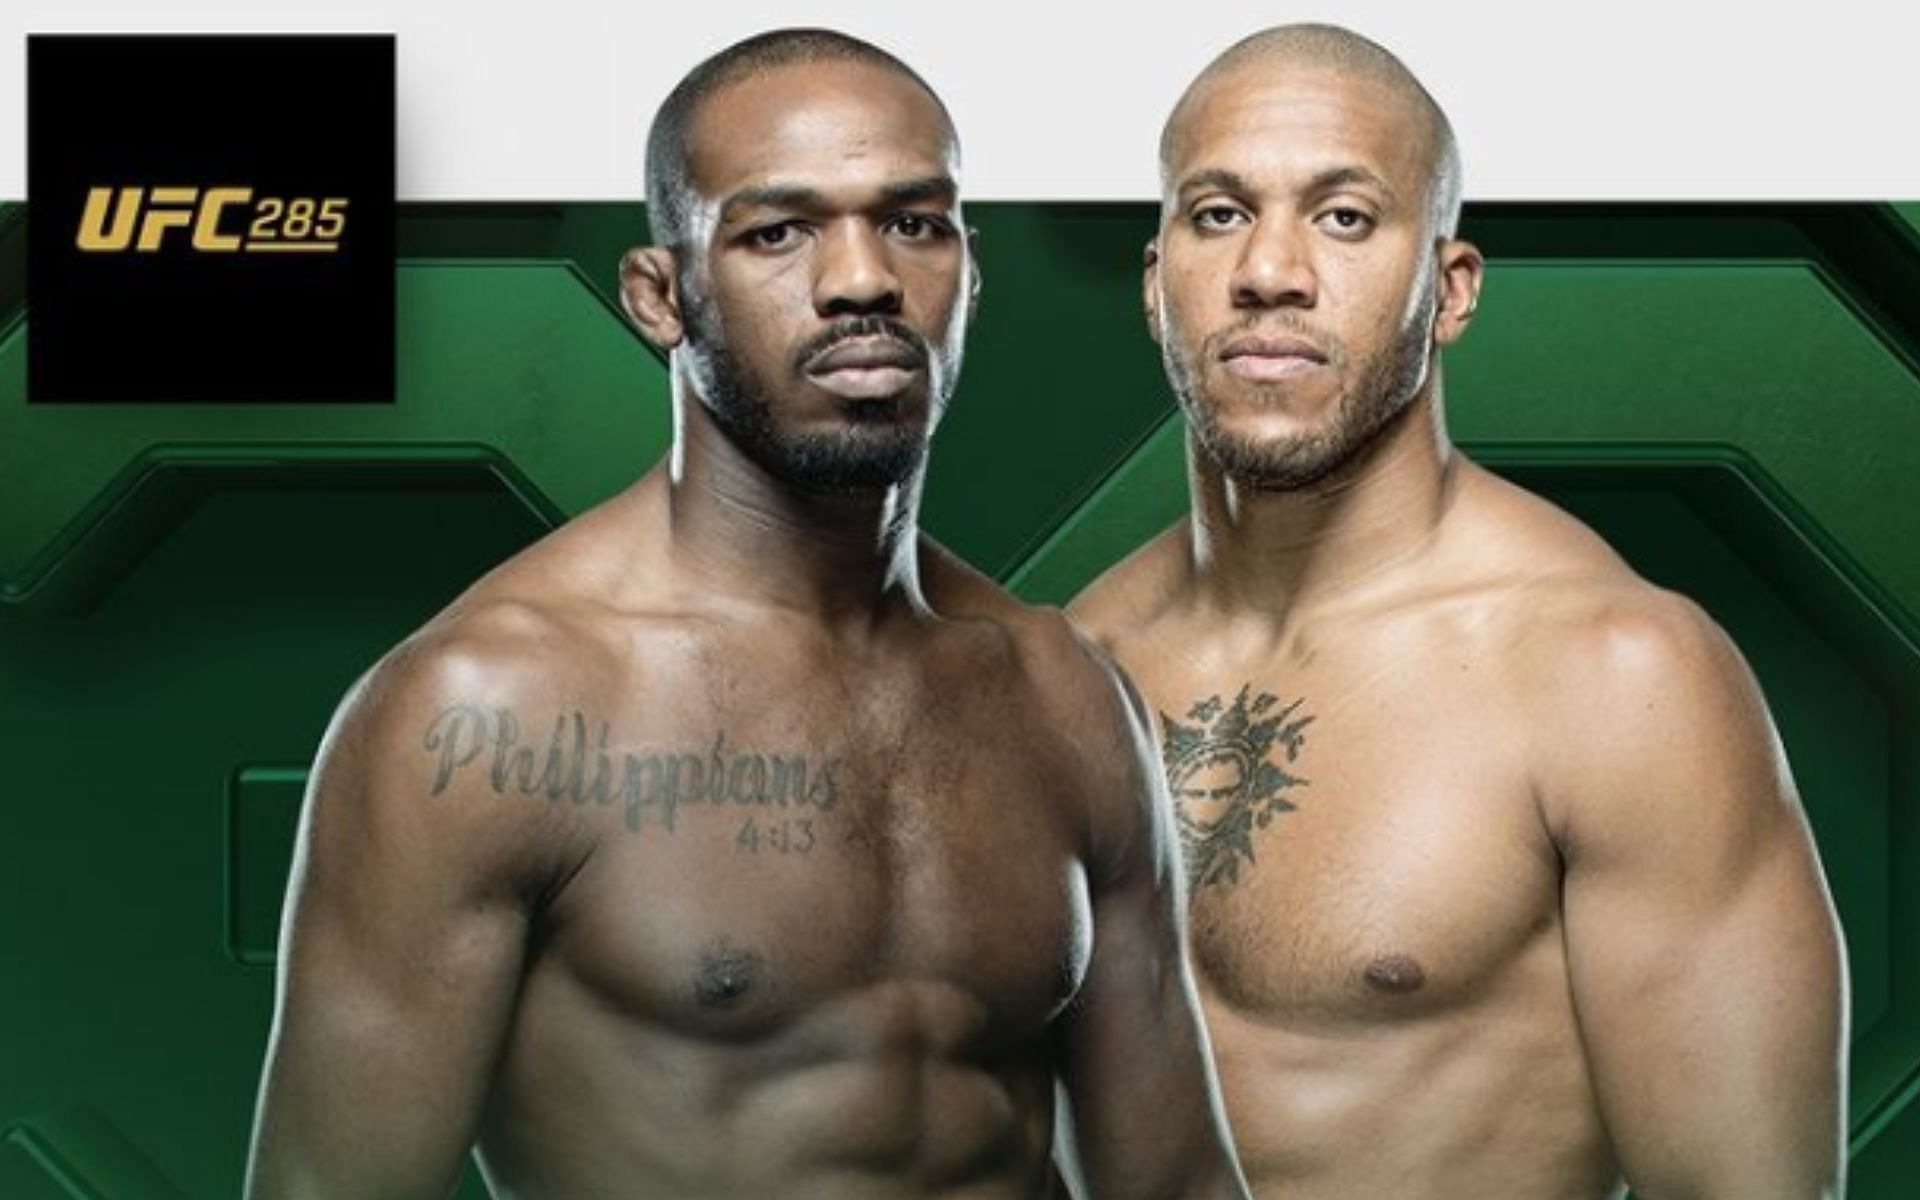 UFC 285 official poster featuring Jon Jones vs. Ciryl Gane [Image courtesy of @ufc on Instagram]